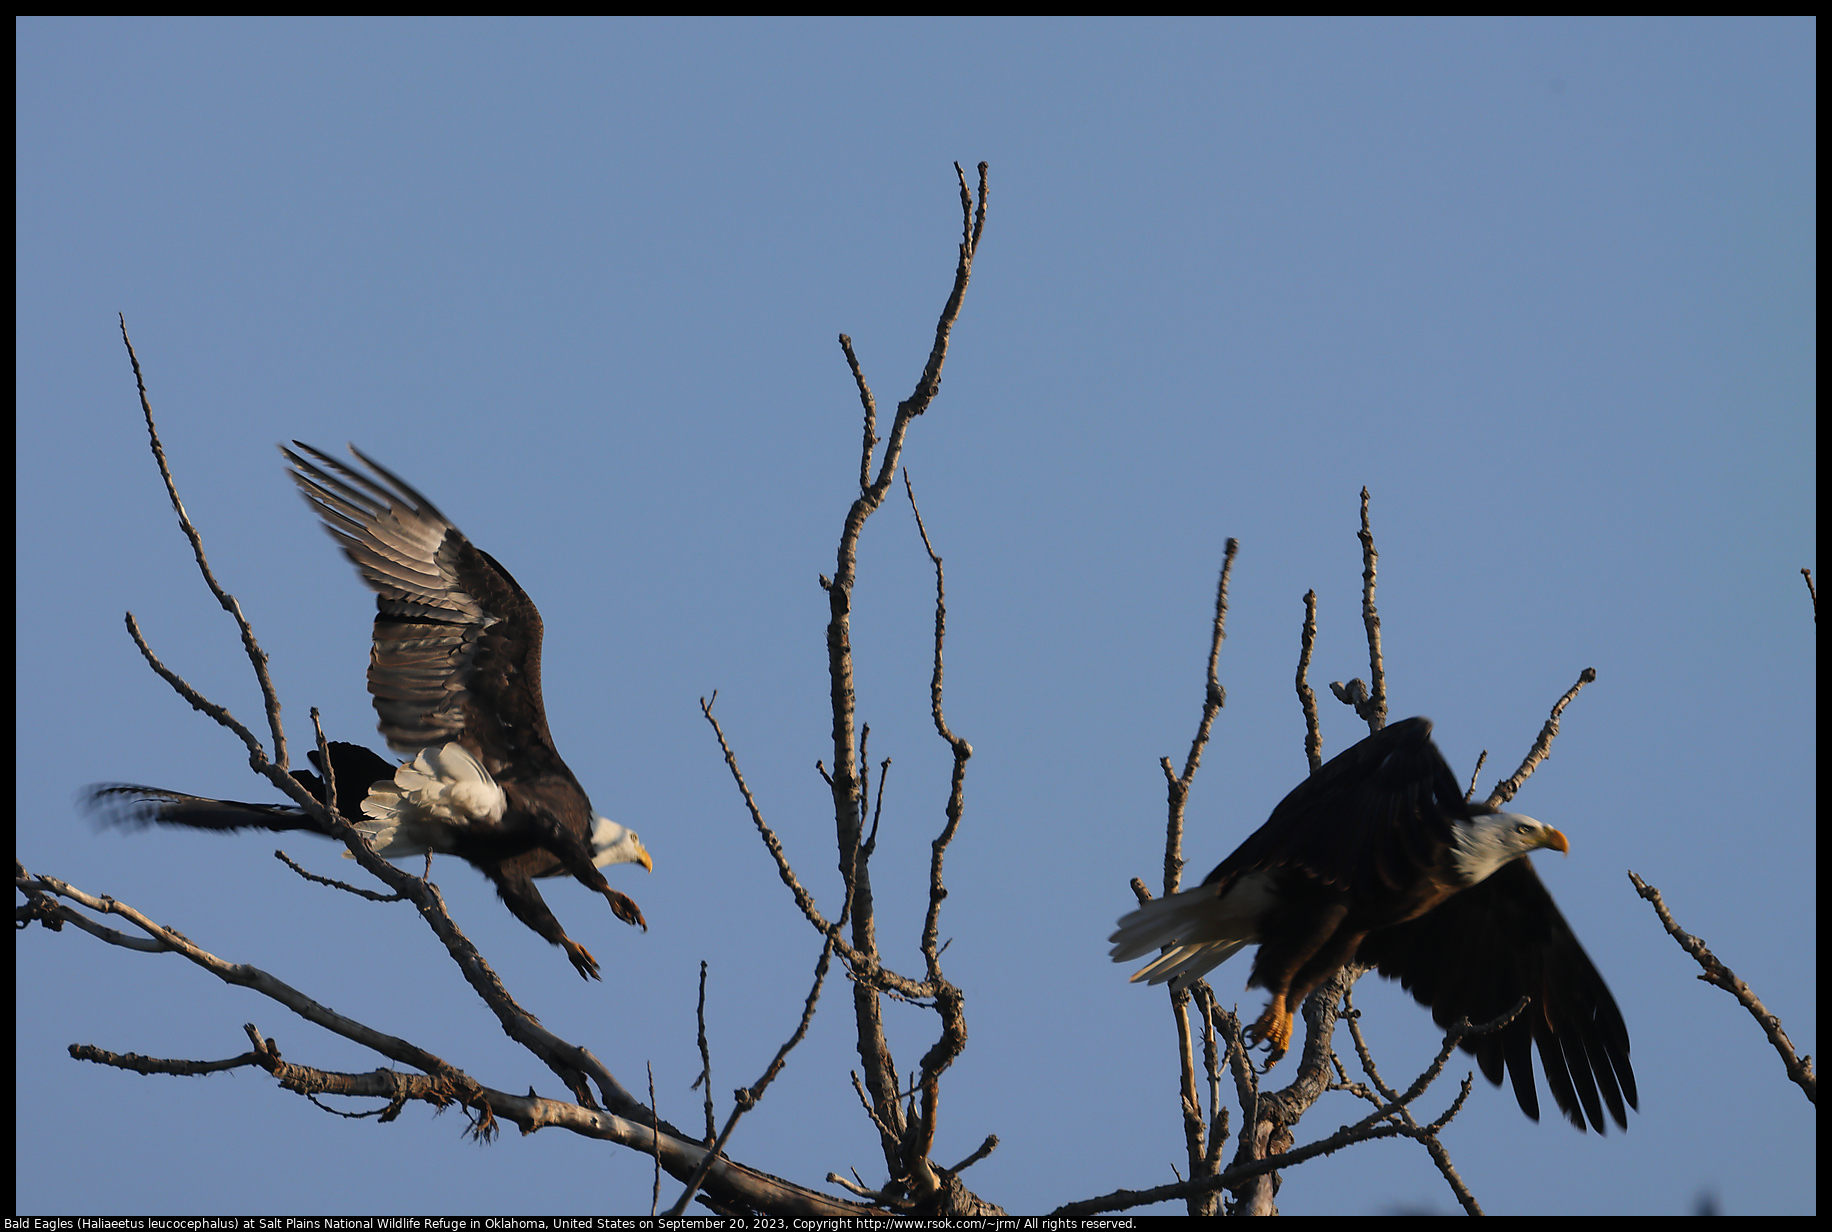 Bald Eagles (Haliaeetus leucocephalus) at Salt Plains National Wildlife Refuge in Oklahoma, United States on September 20, 2023